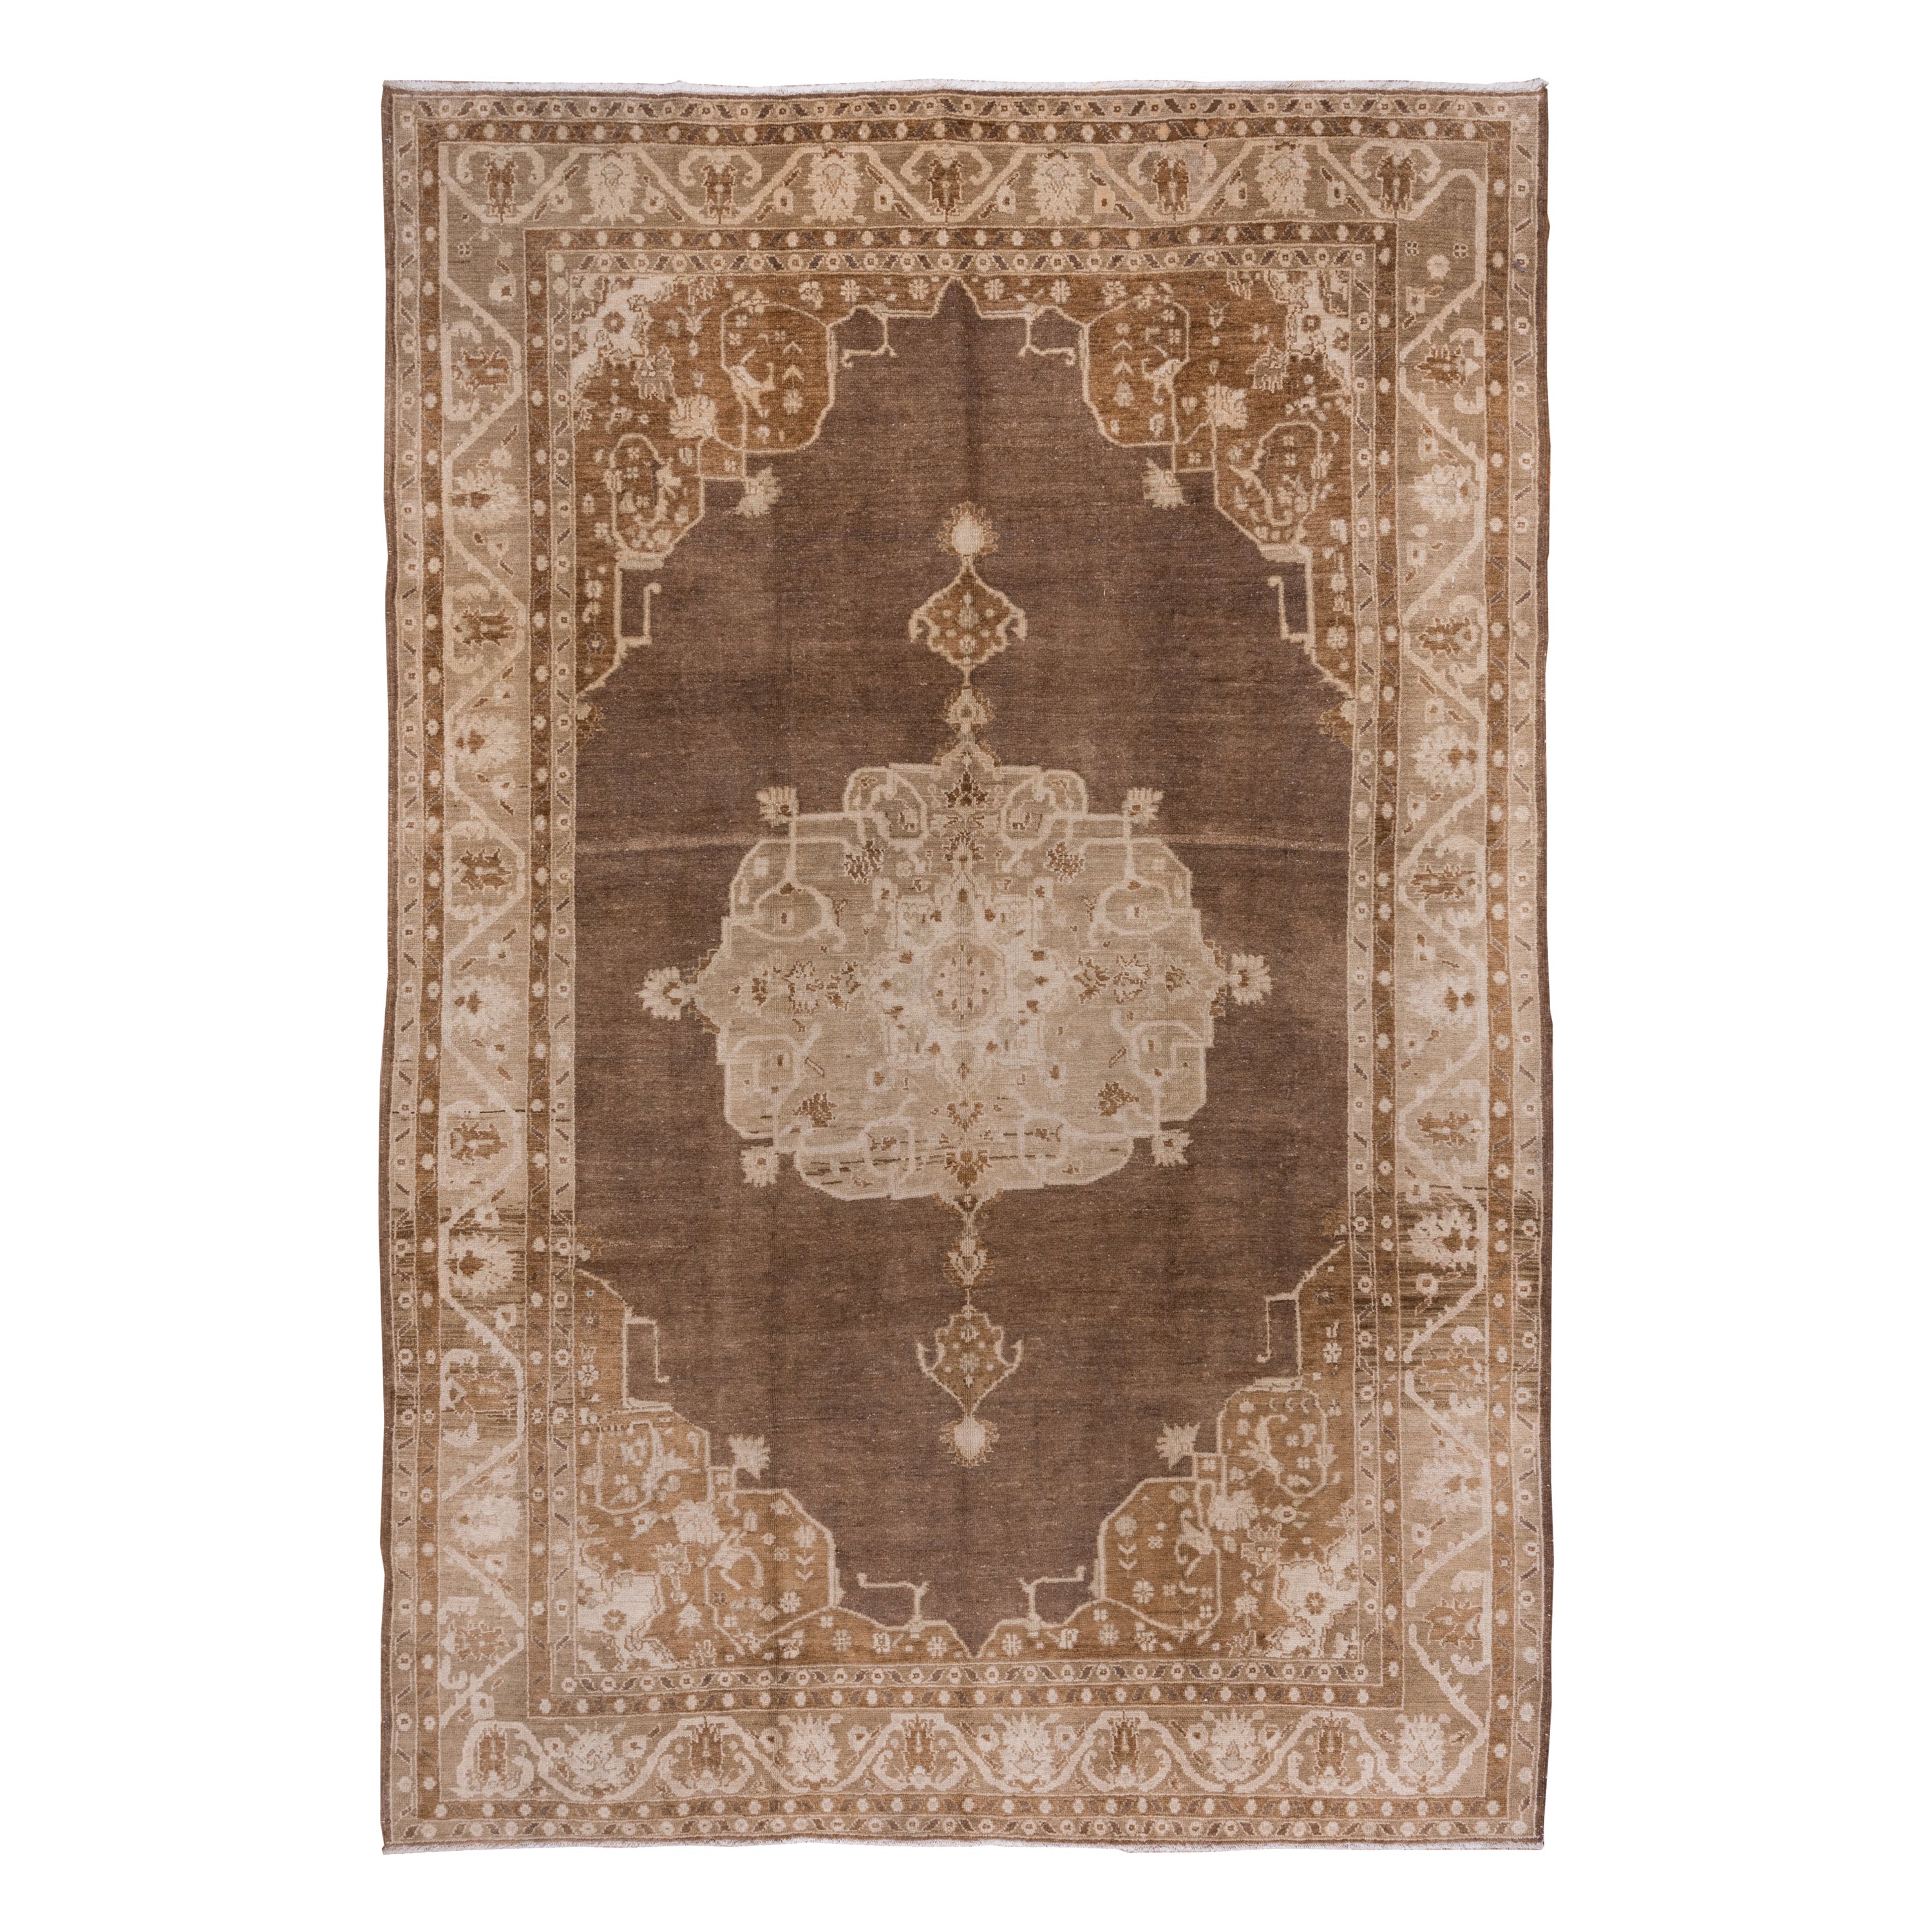 Antique Turkish Oushak Carpet, Brown Field, Light Brown Borders, Circa 1930s